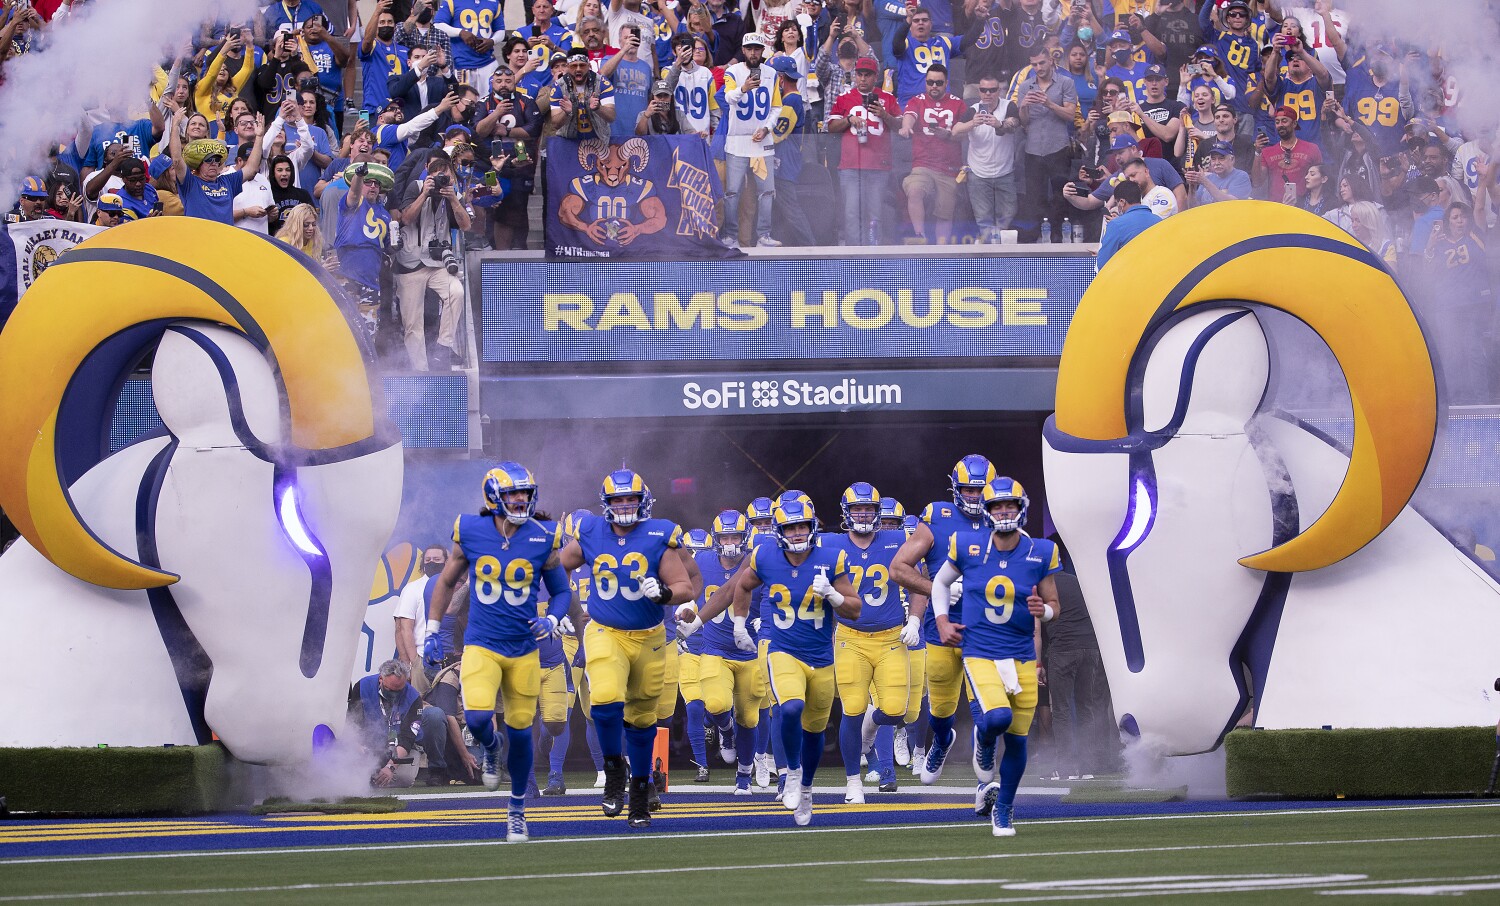 LA Times: Rams podcast